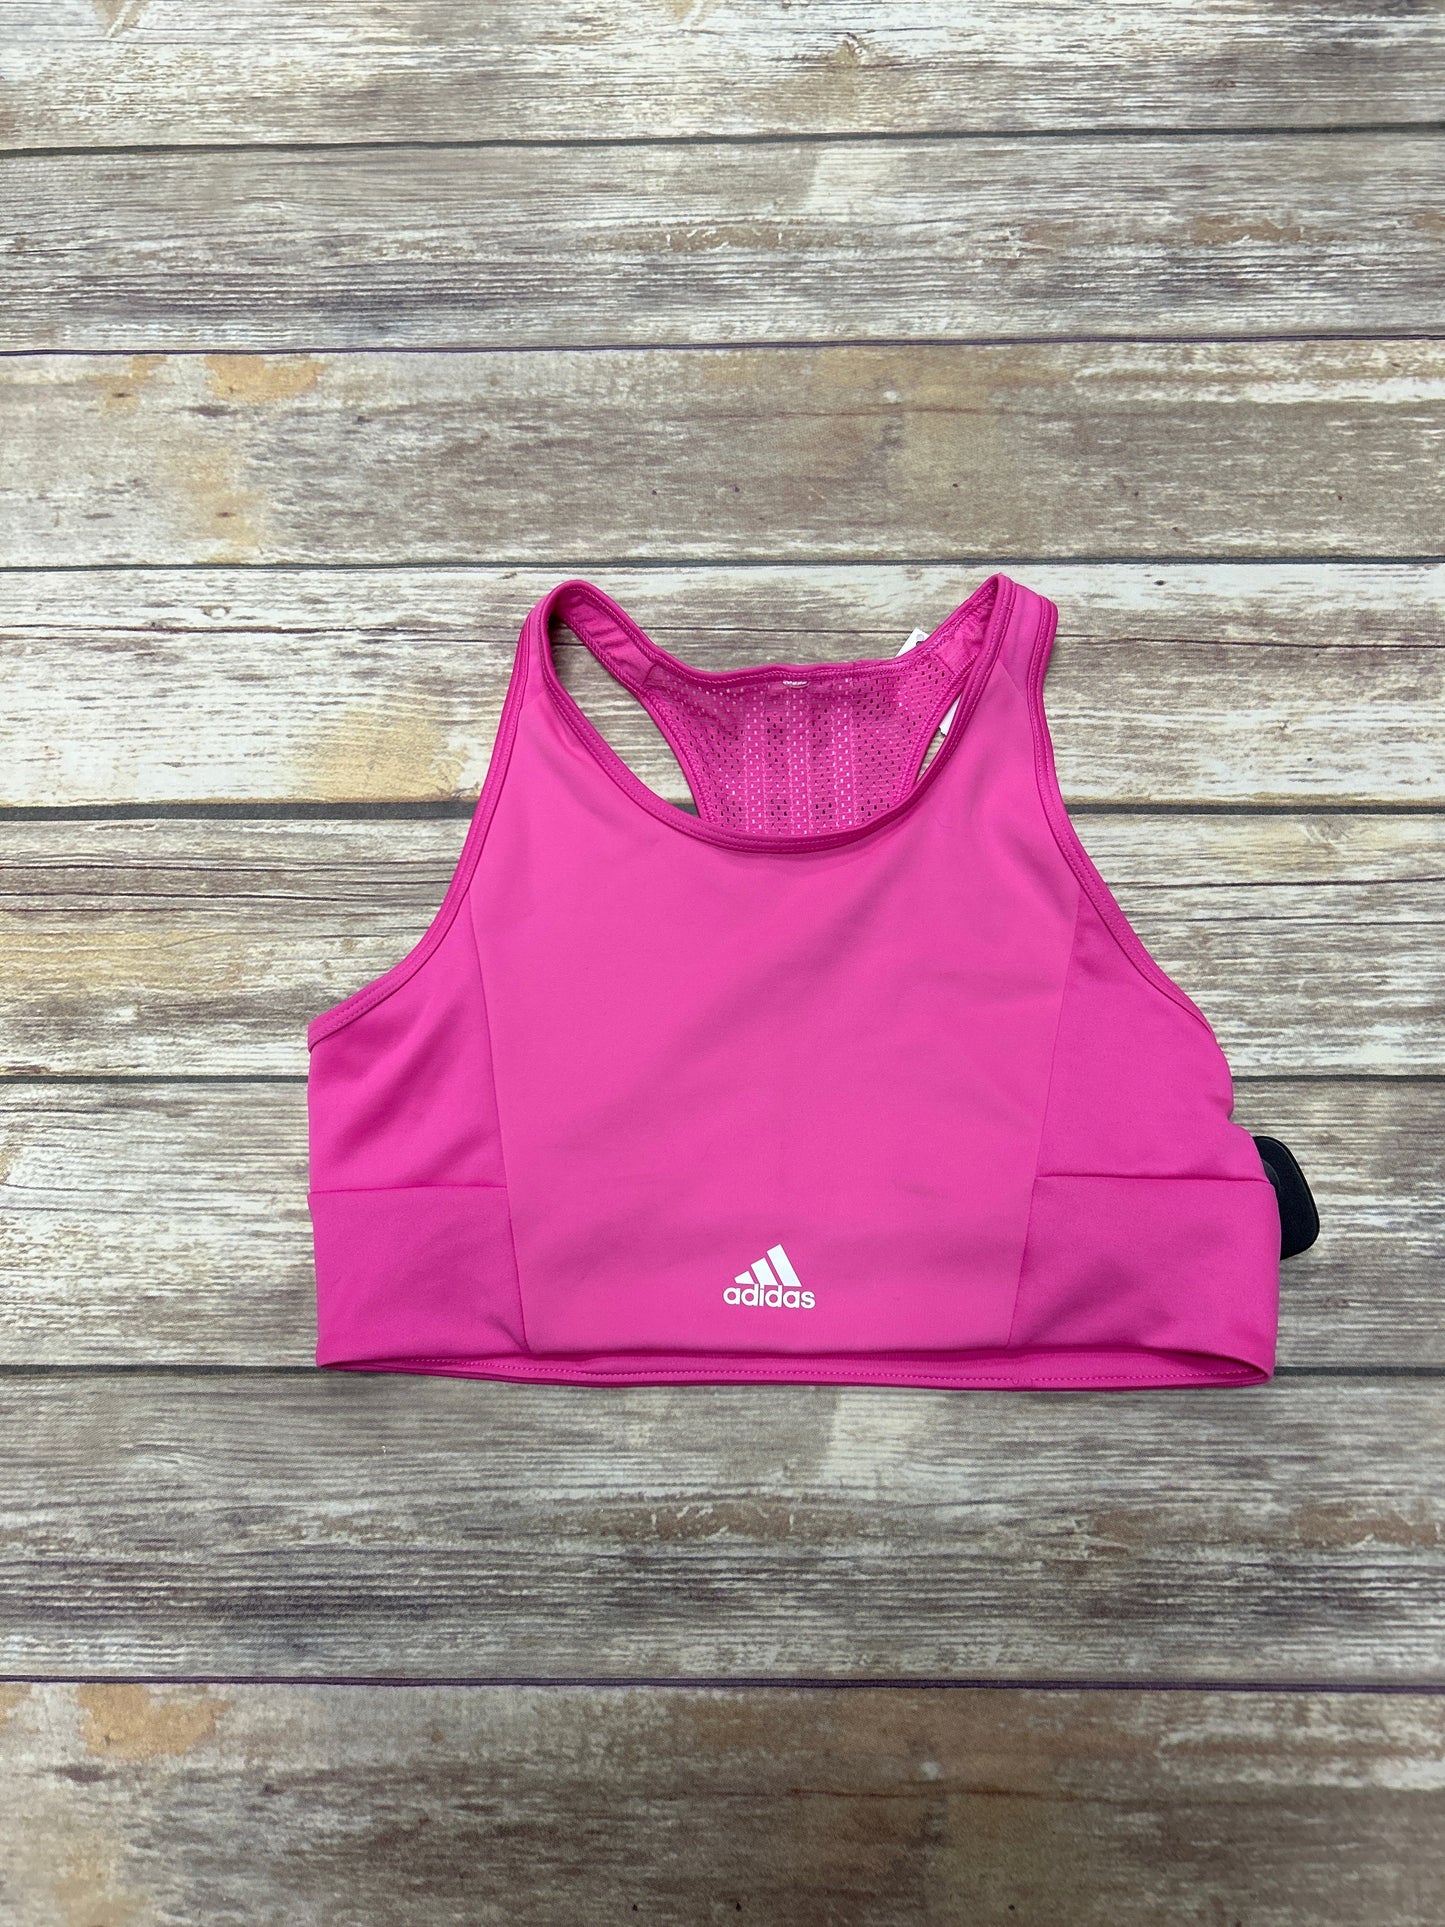 Pink Athletic Bra Adidas, Size S